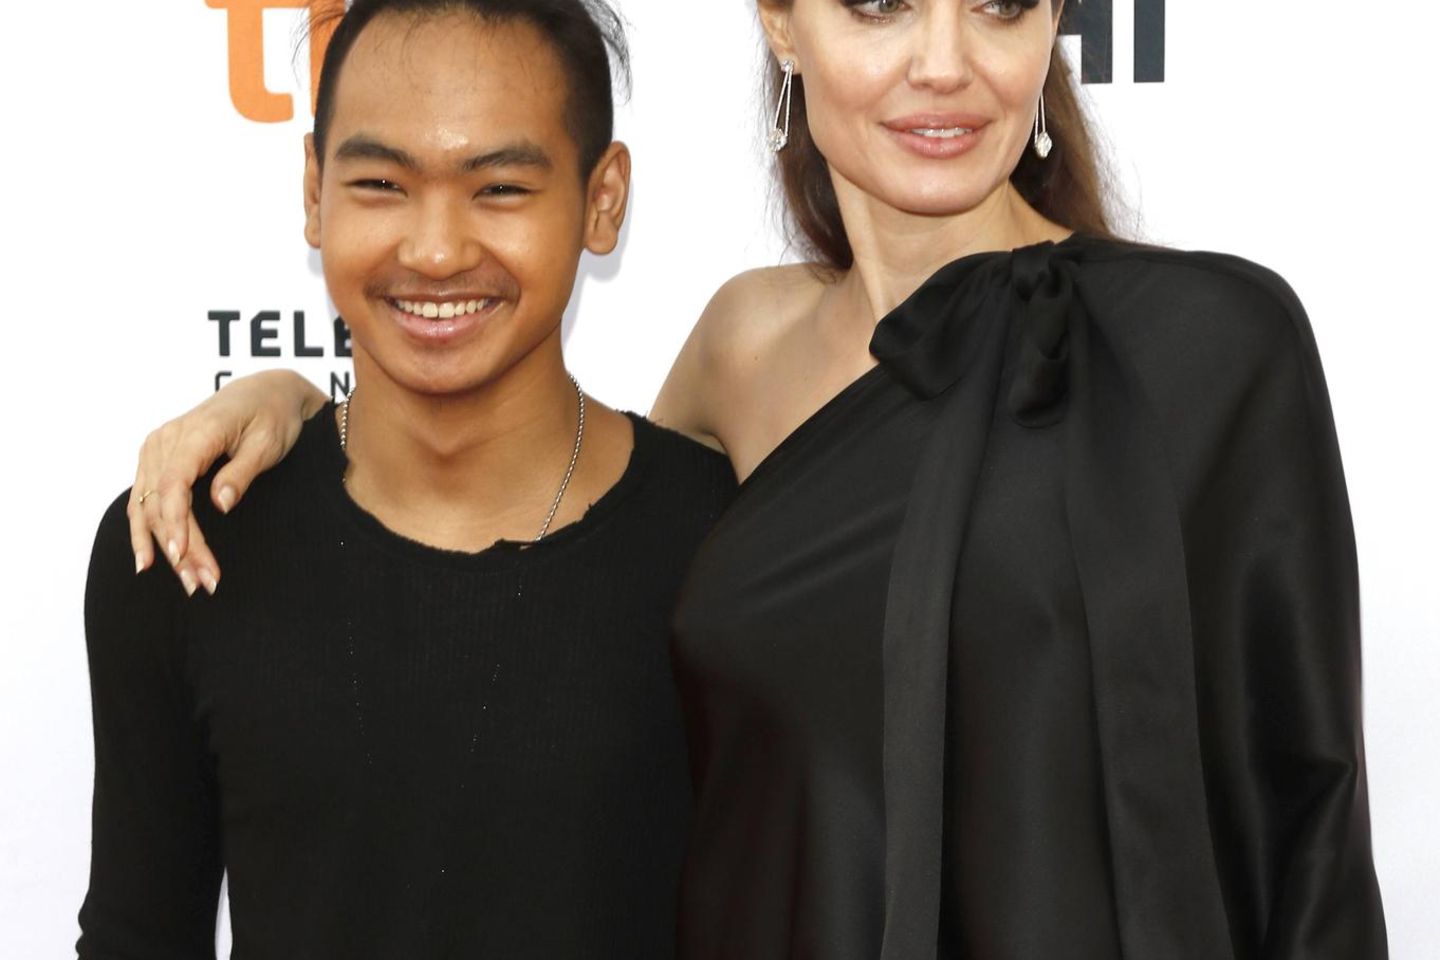 Maddox Jolie Pitt und Angelina Jolie